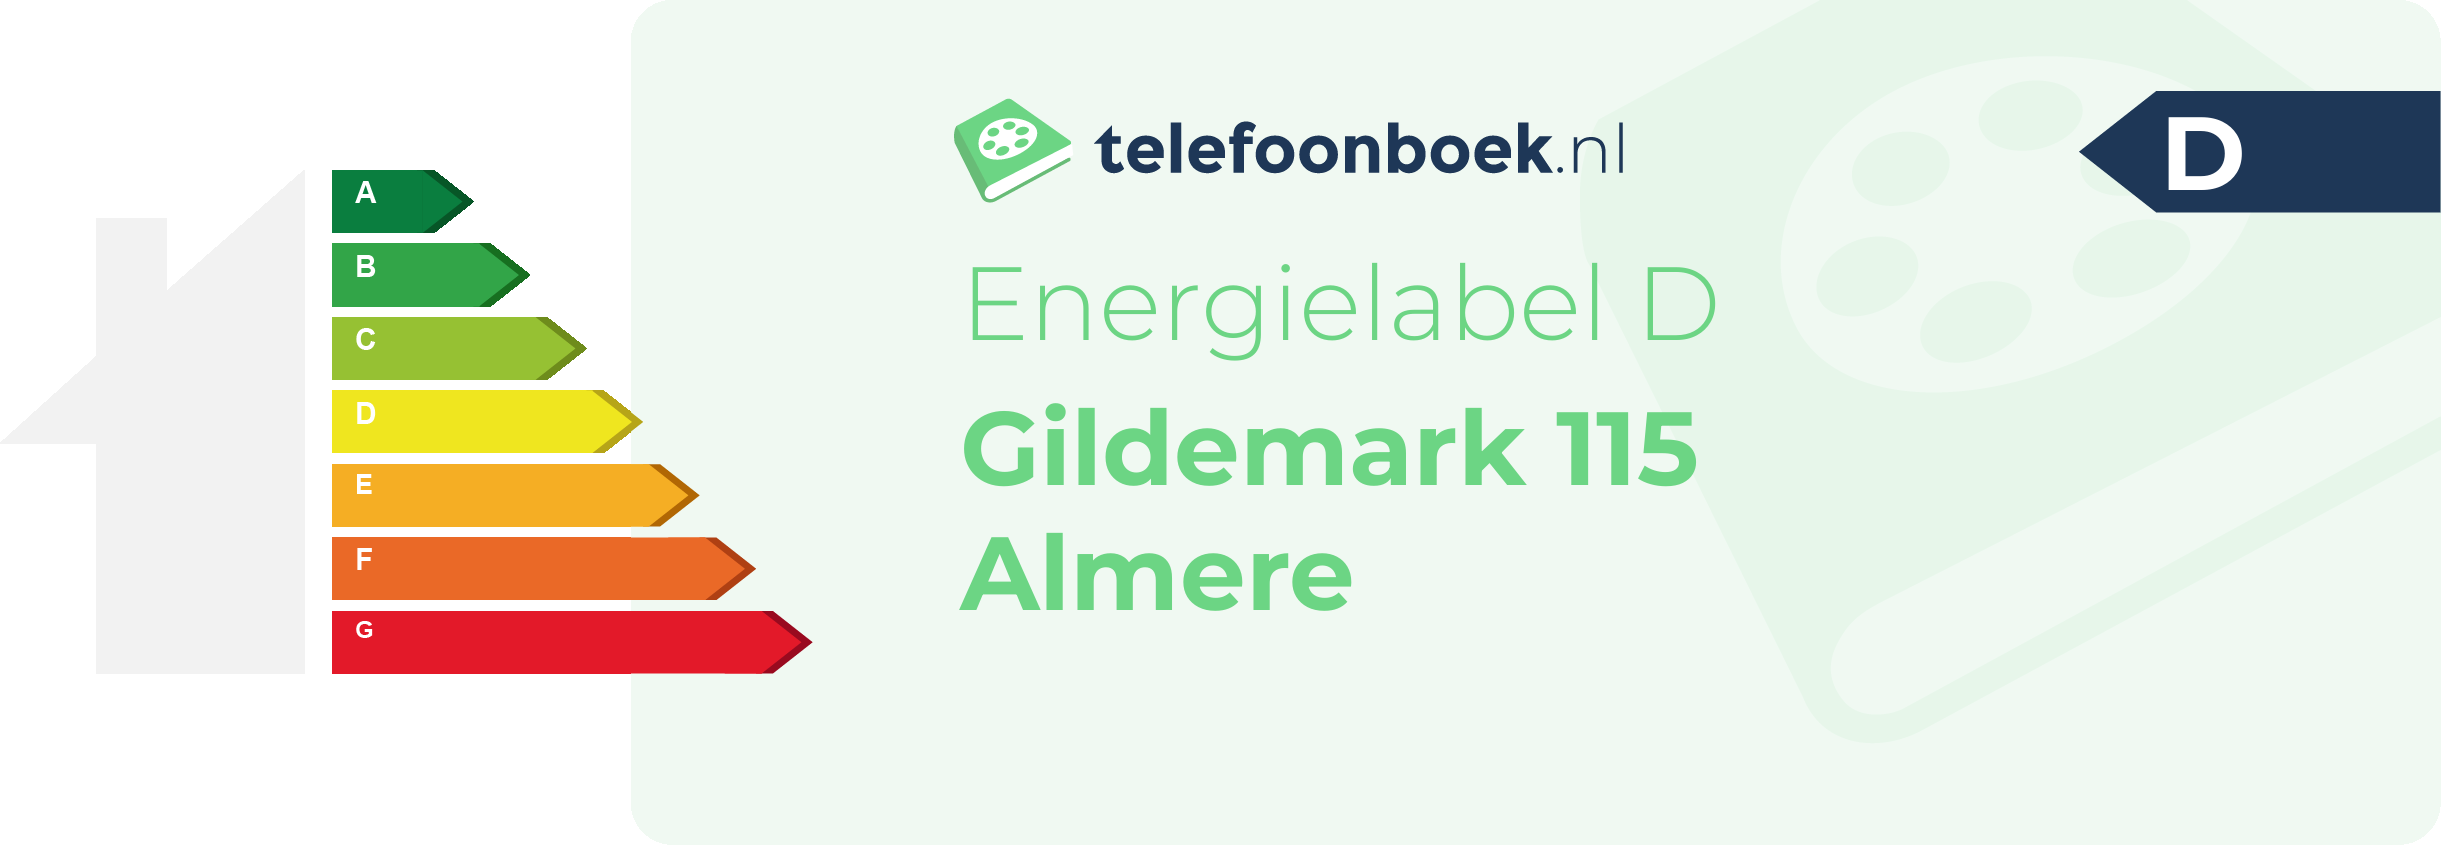 Energielabel Gildemark 115 Almere